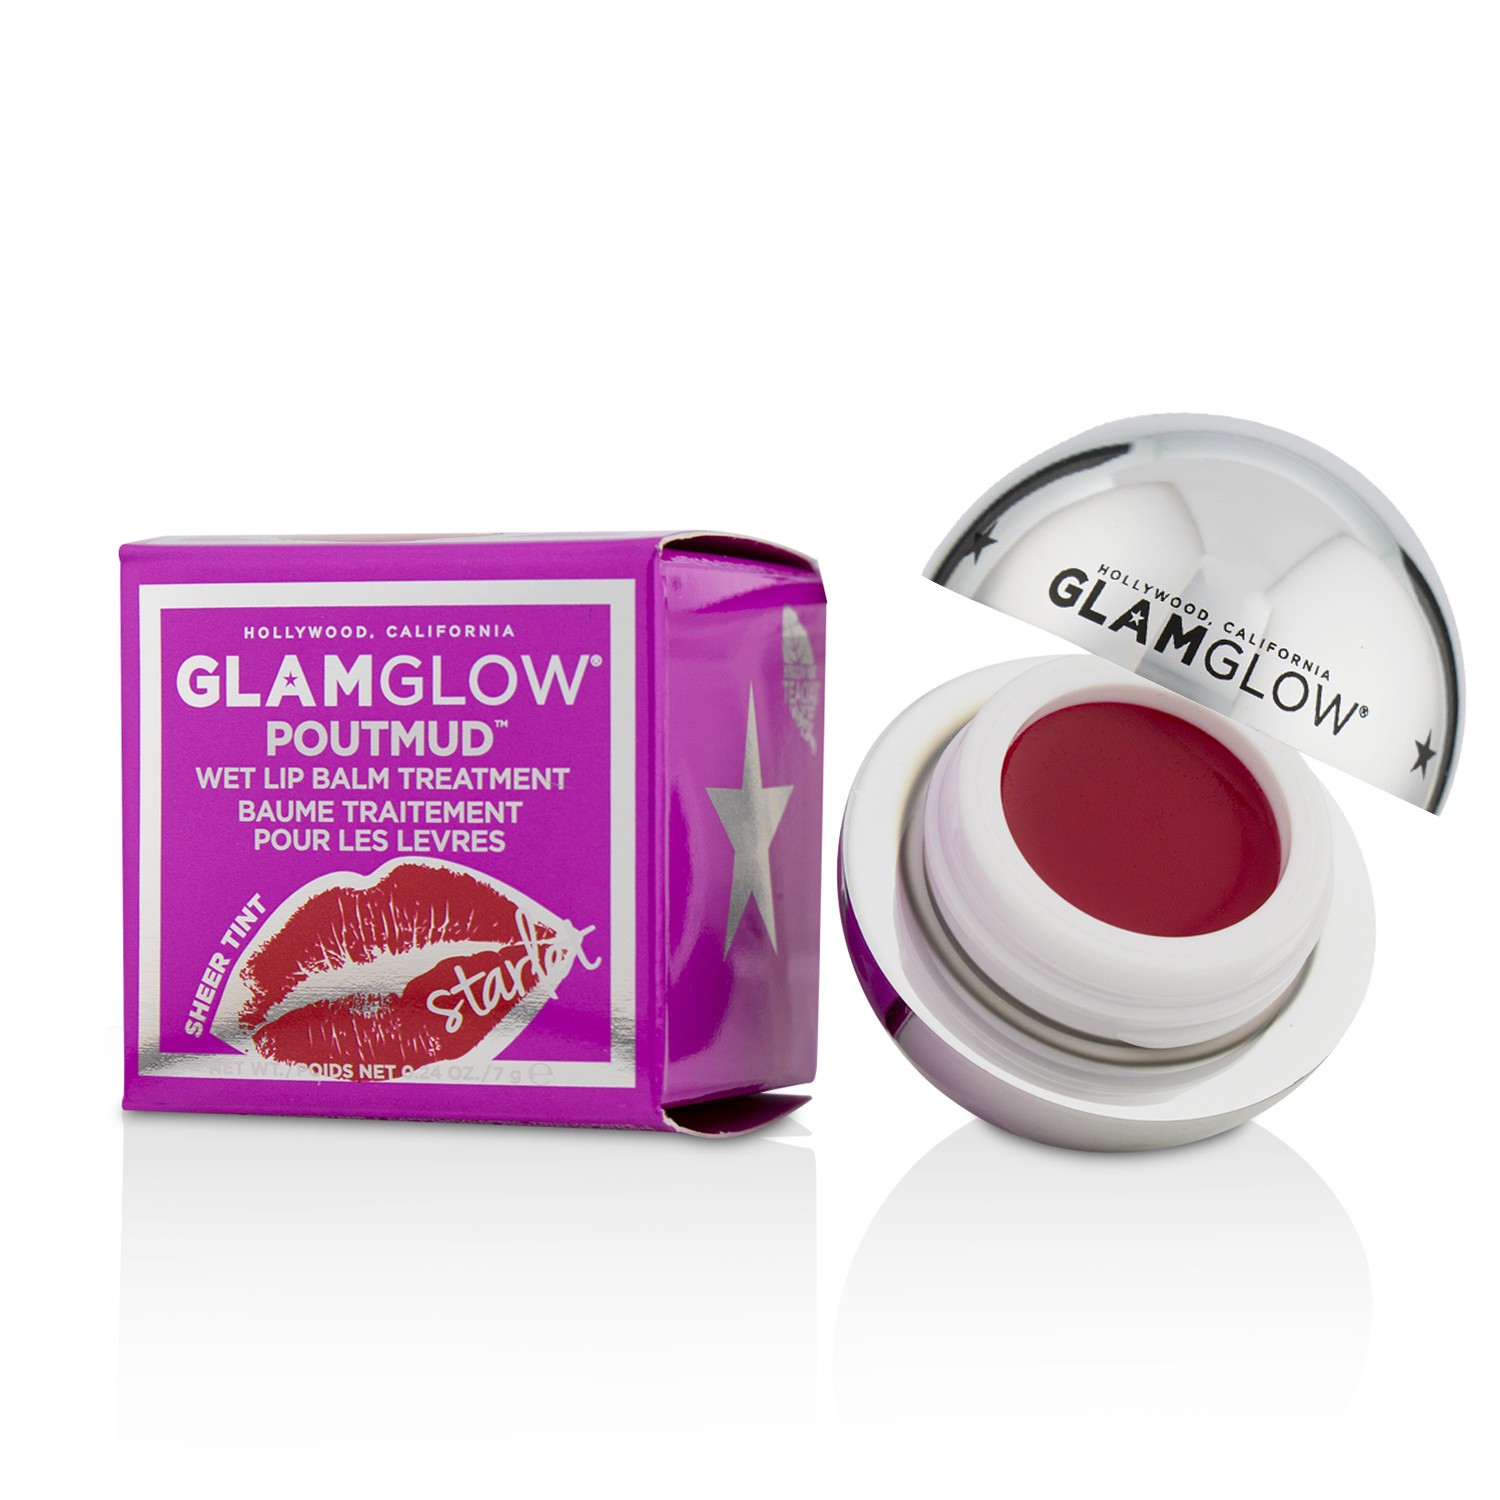 PoutMud Sheer Tint Wet Lip Balm Treatment - Starlet Glamglow Image